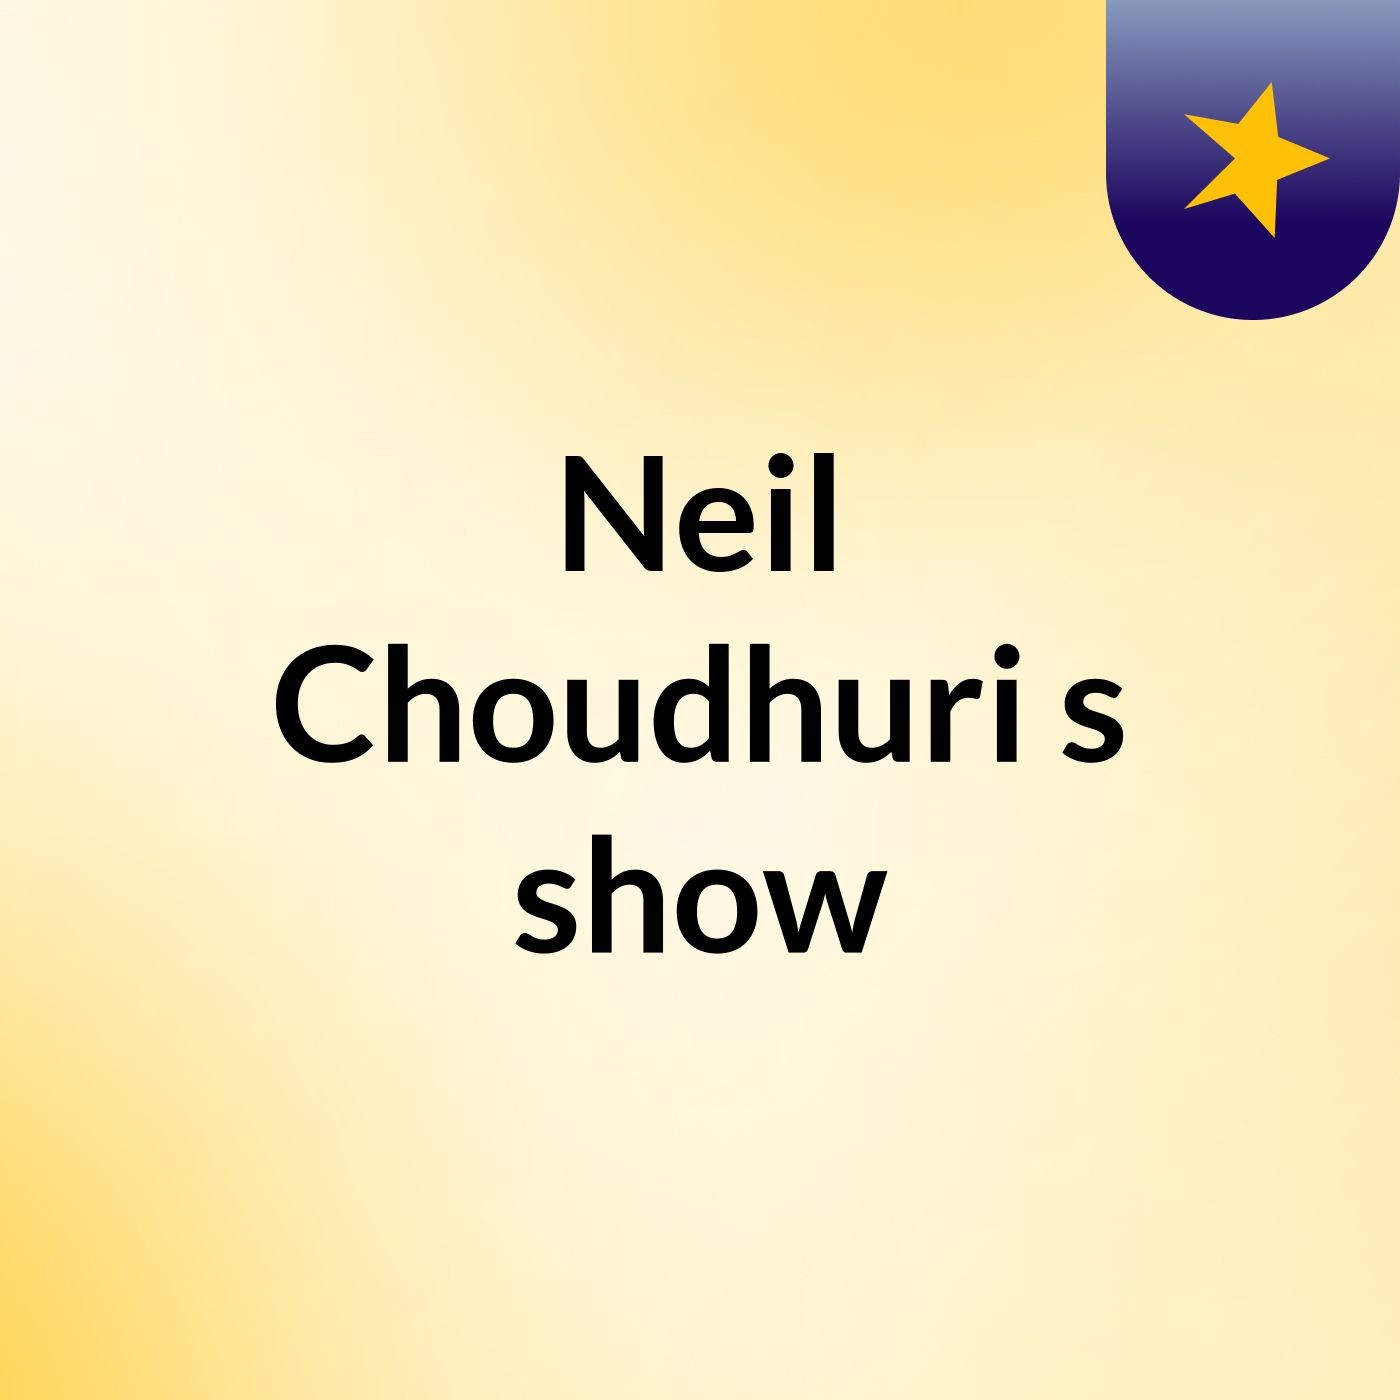 Neil Choudhuri's show